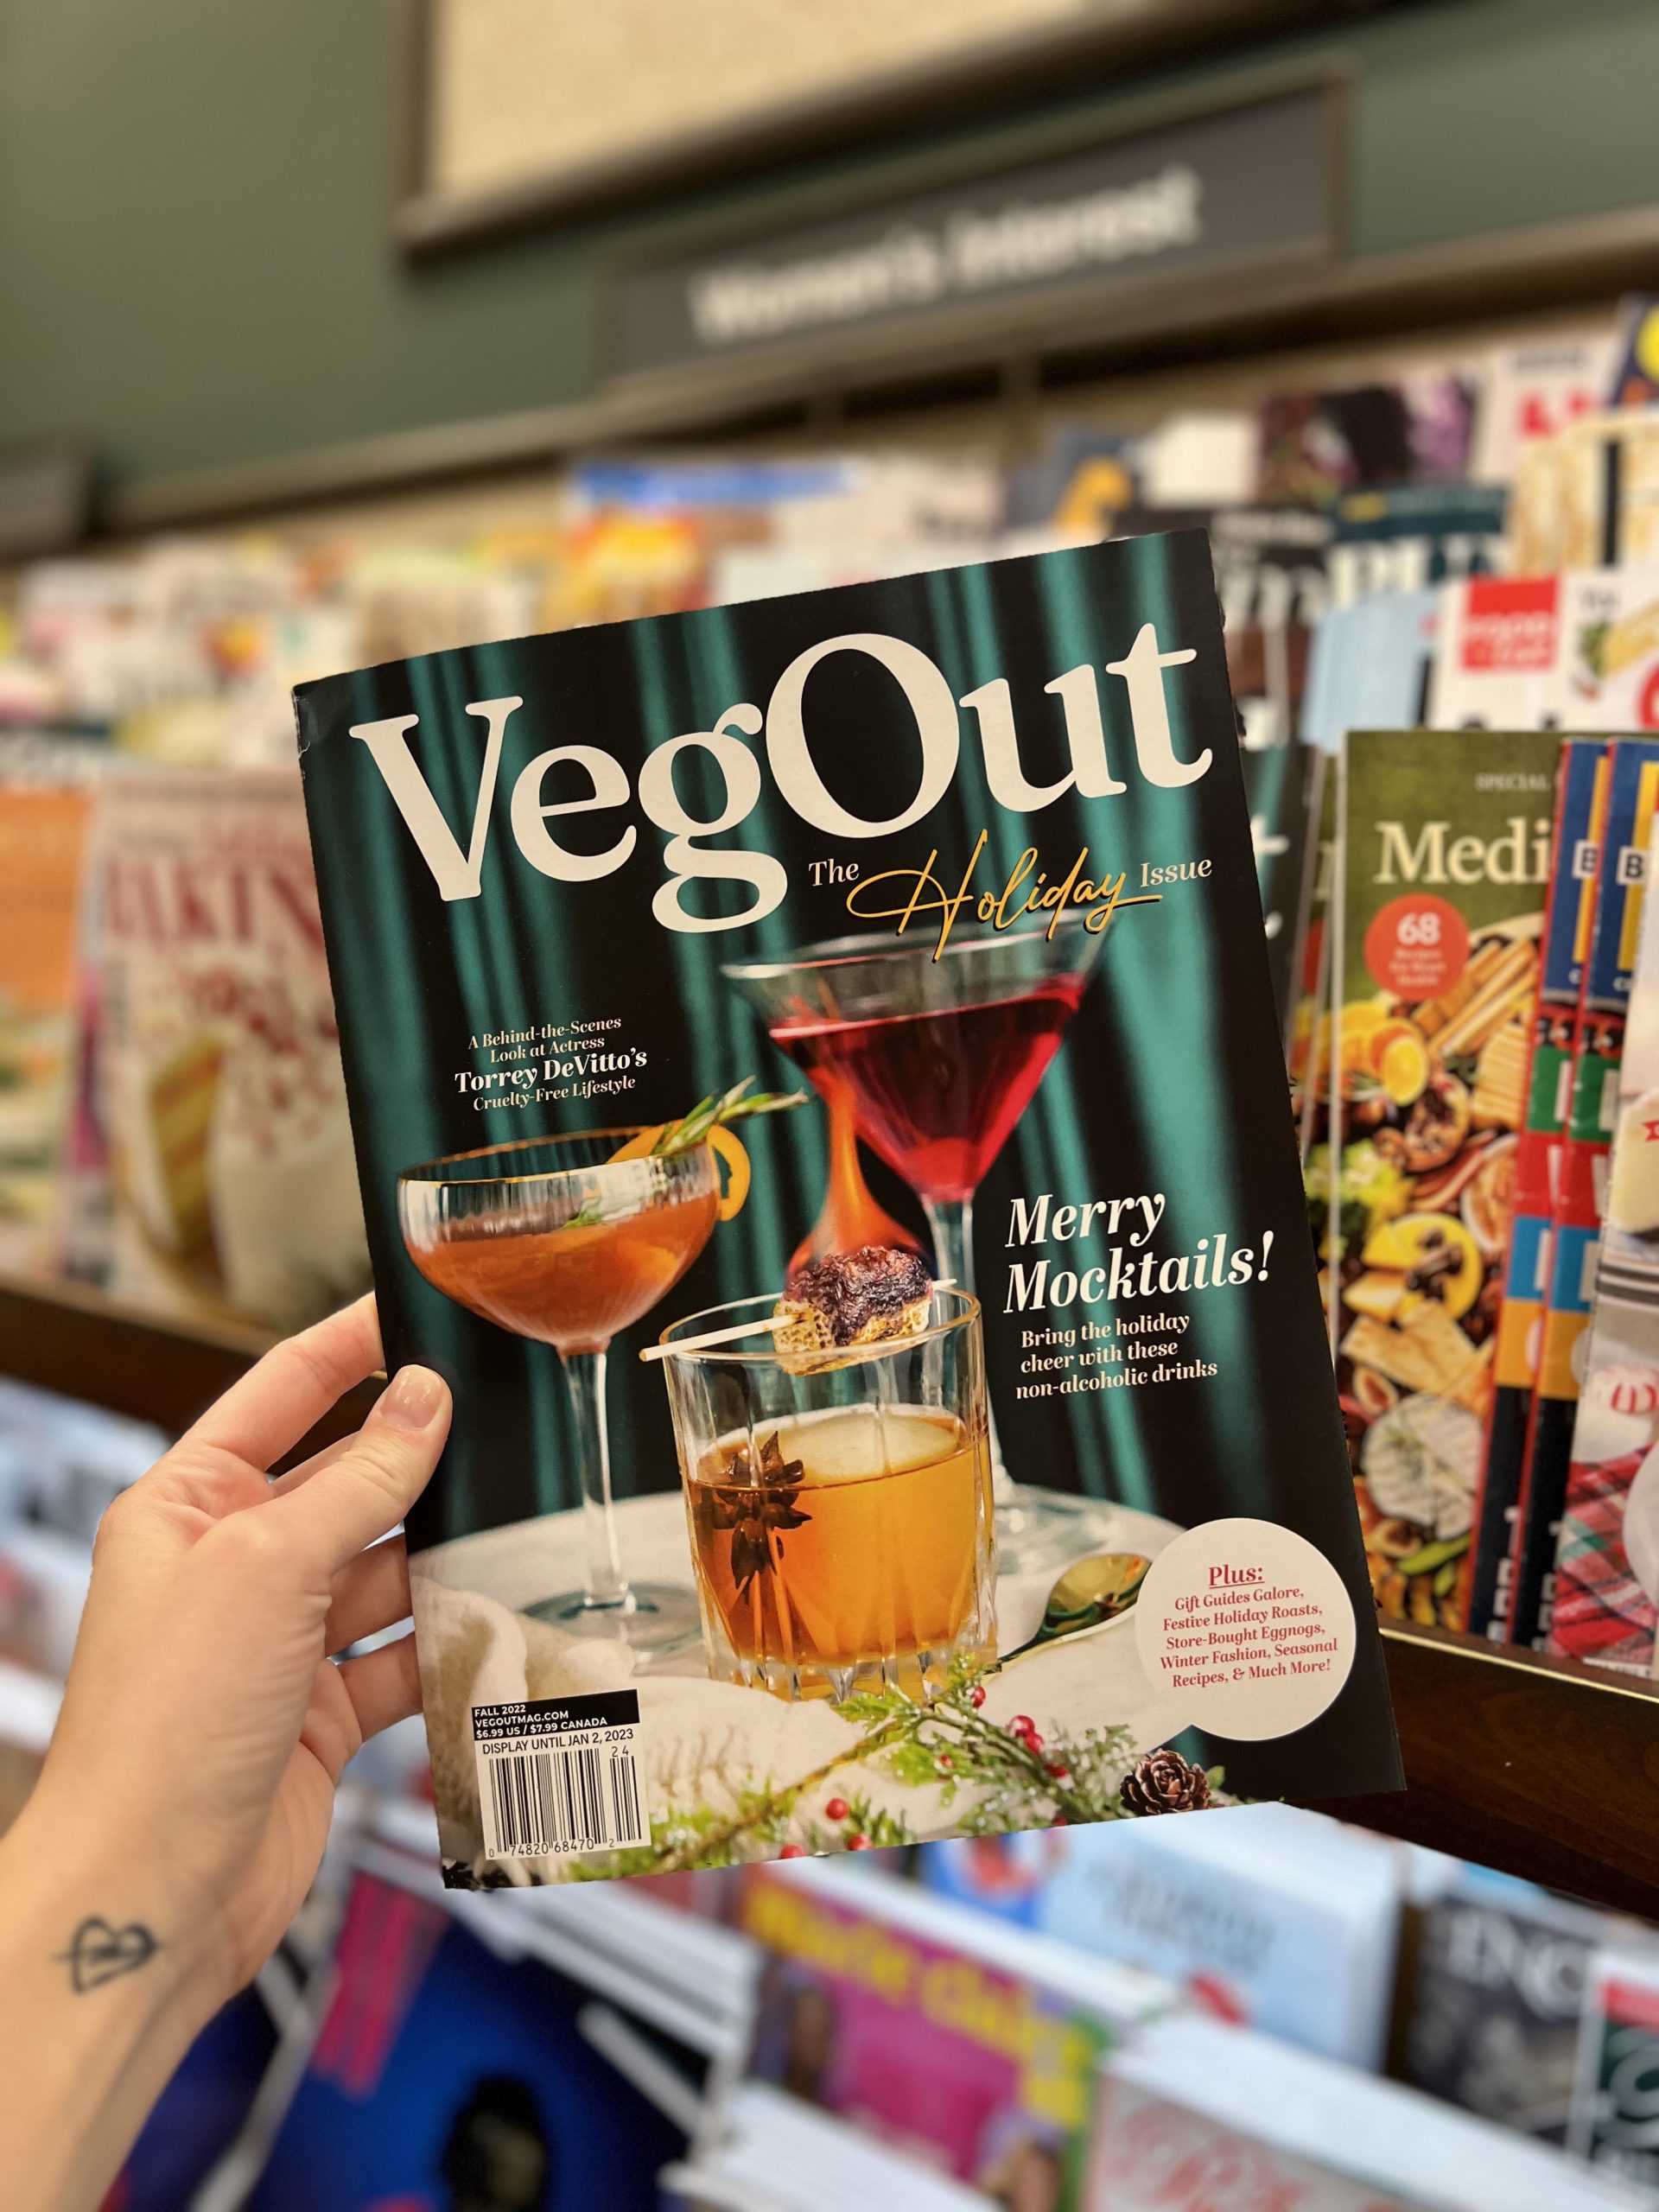 VegOut Magazine